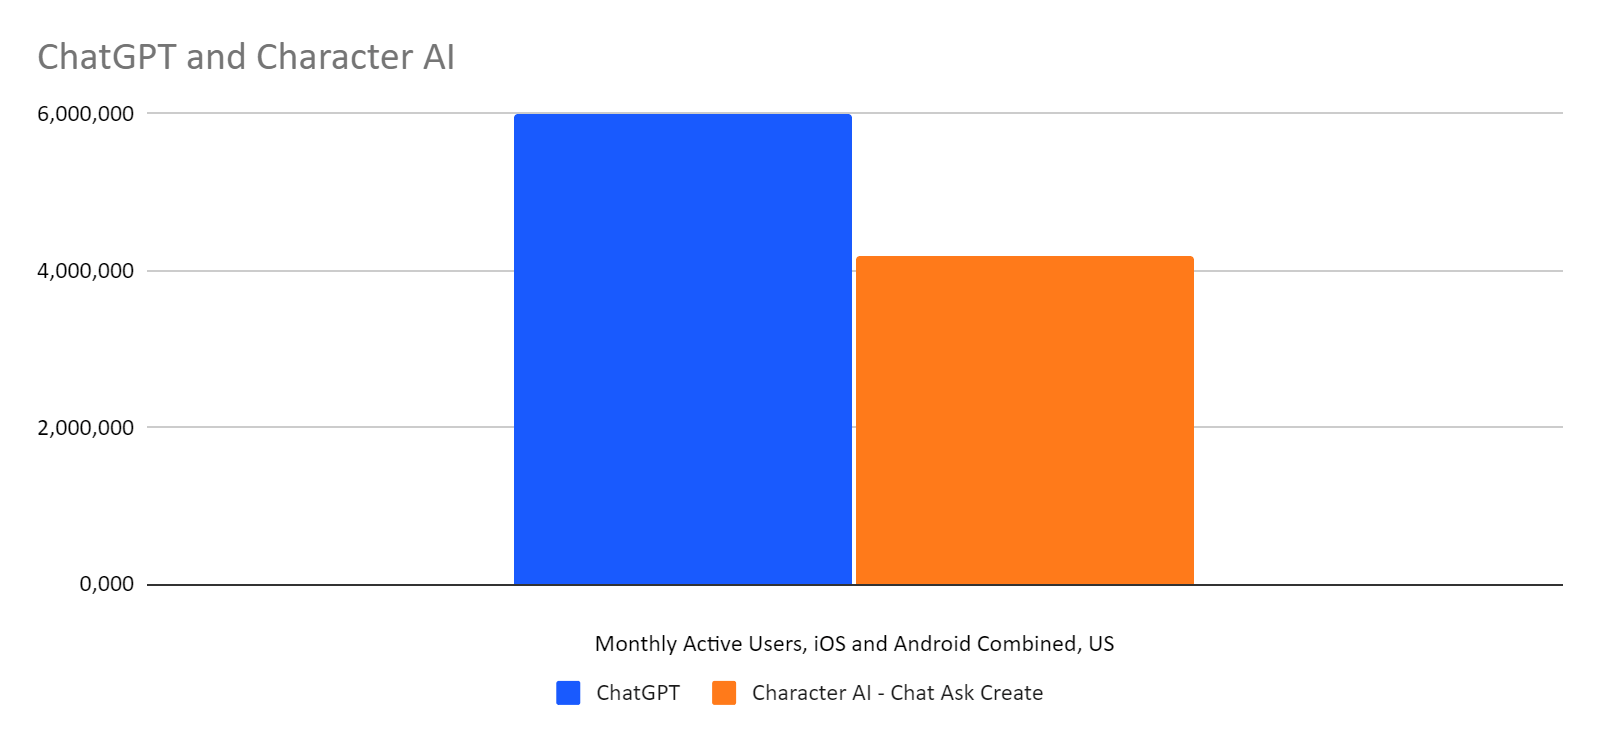 AI 应用程序 Character.ai 在美国正在追赶 ChatGPT